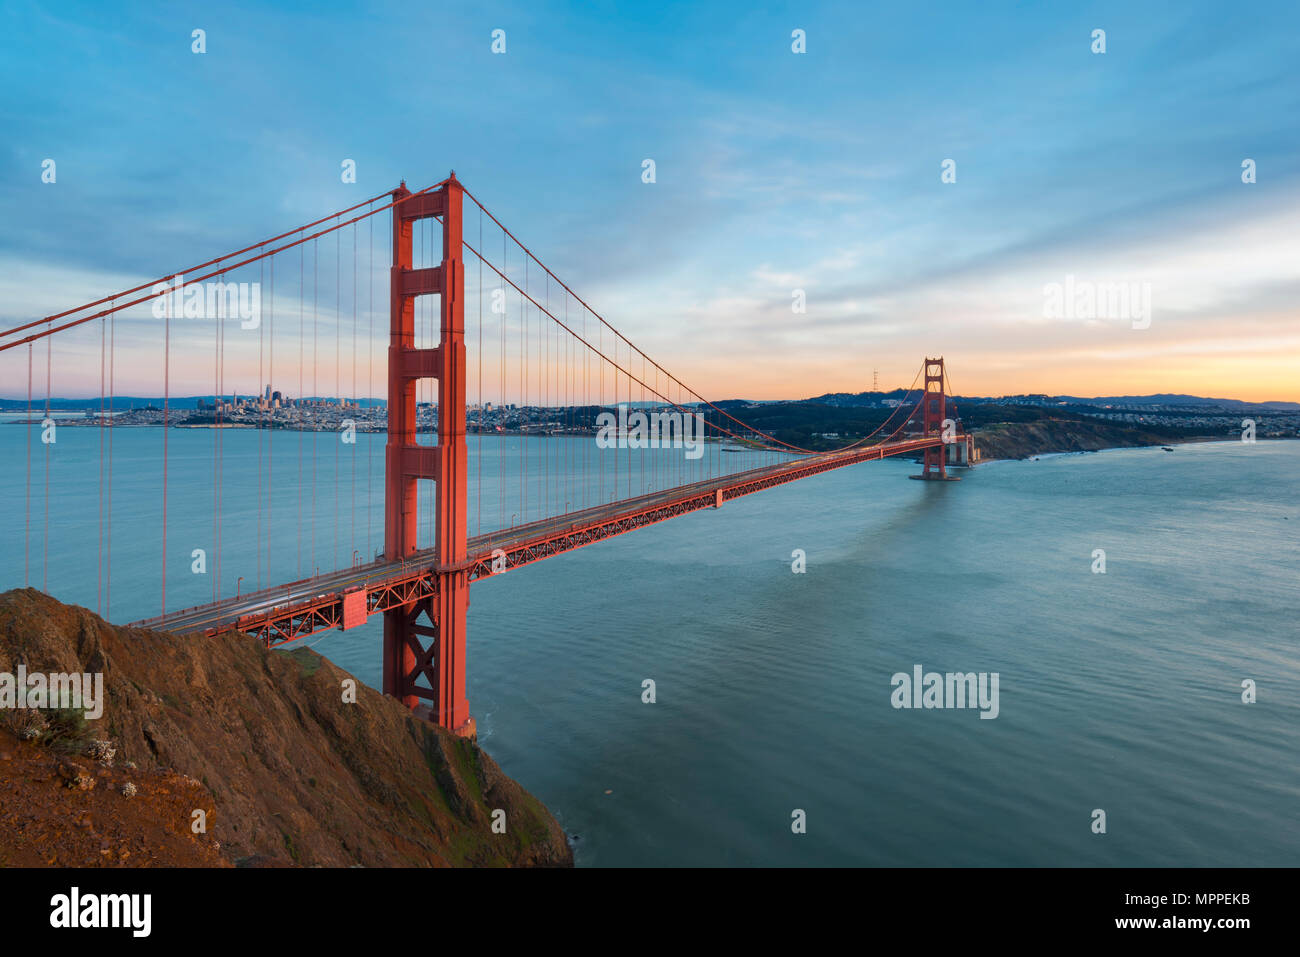 USA, California, San Francisco, Golden Gate Bridge at sunset Stock Photo